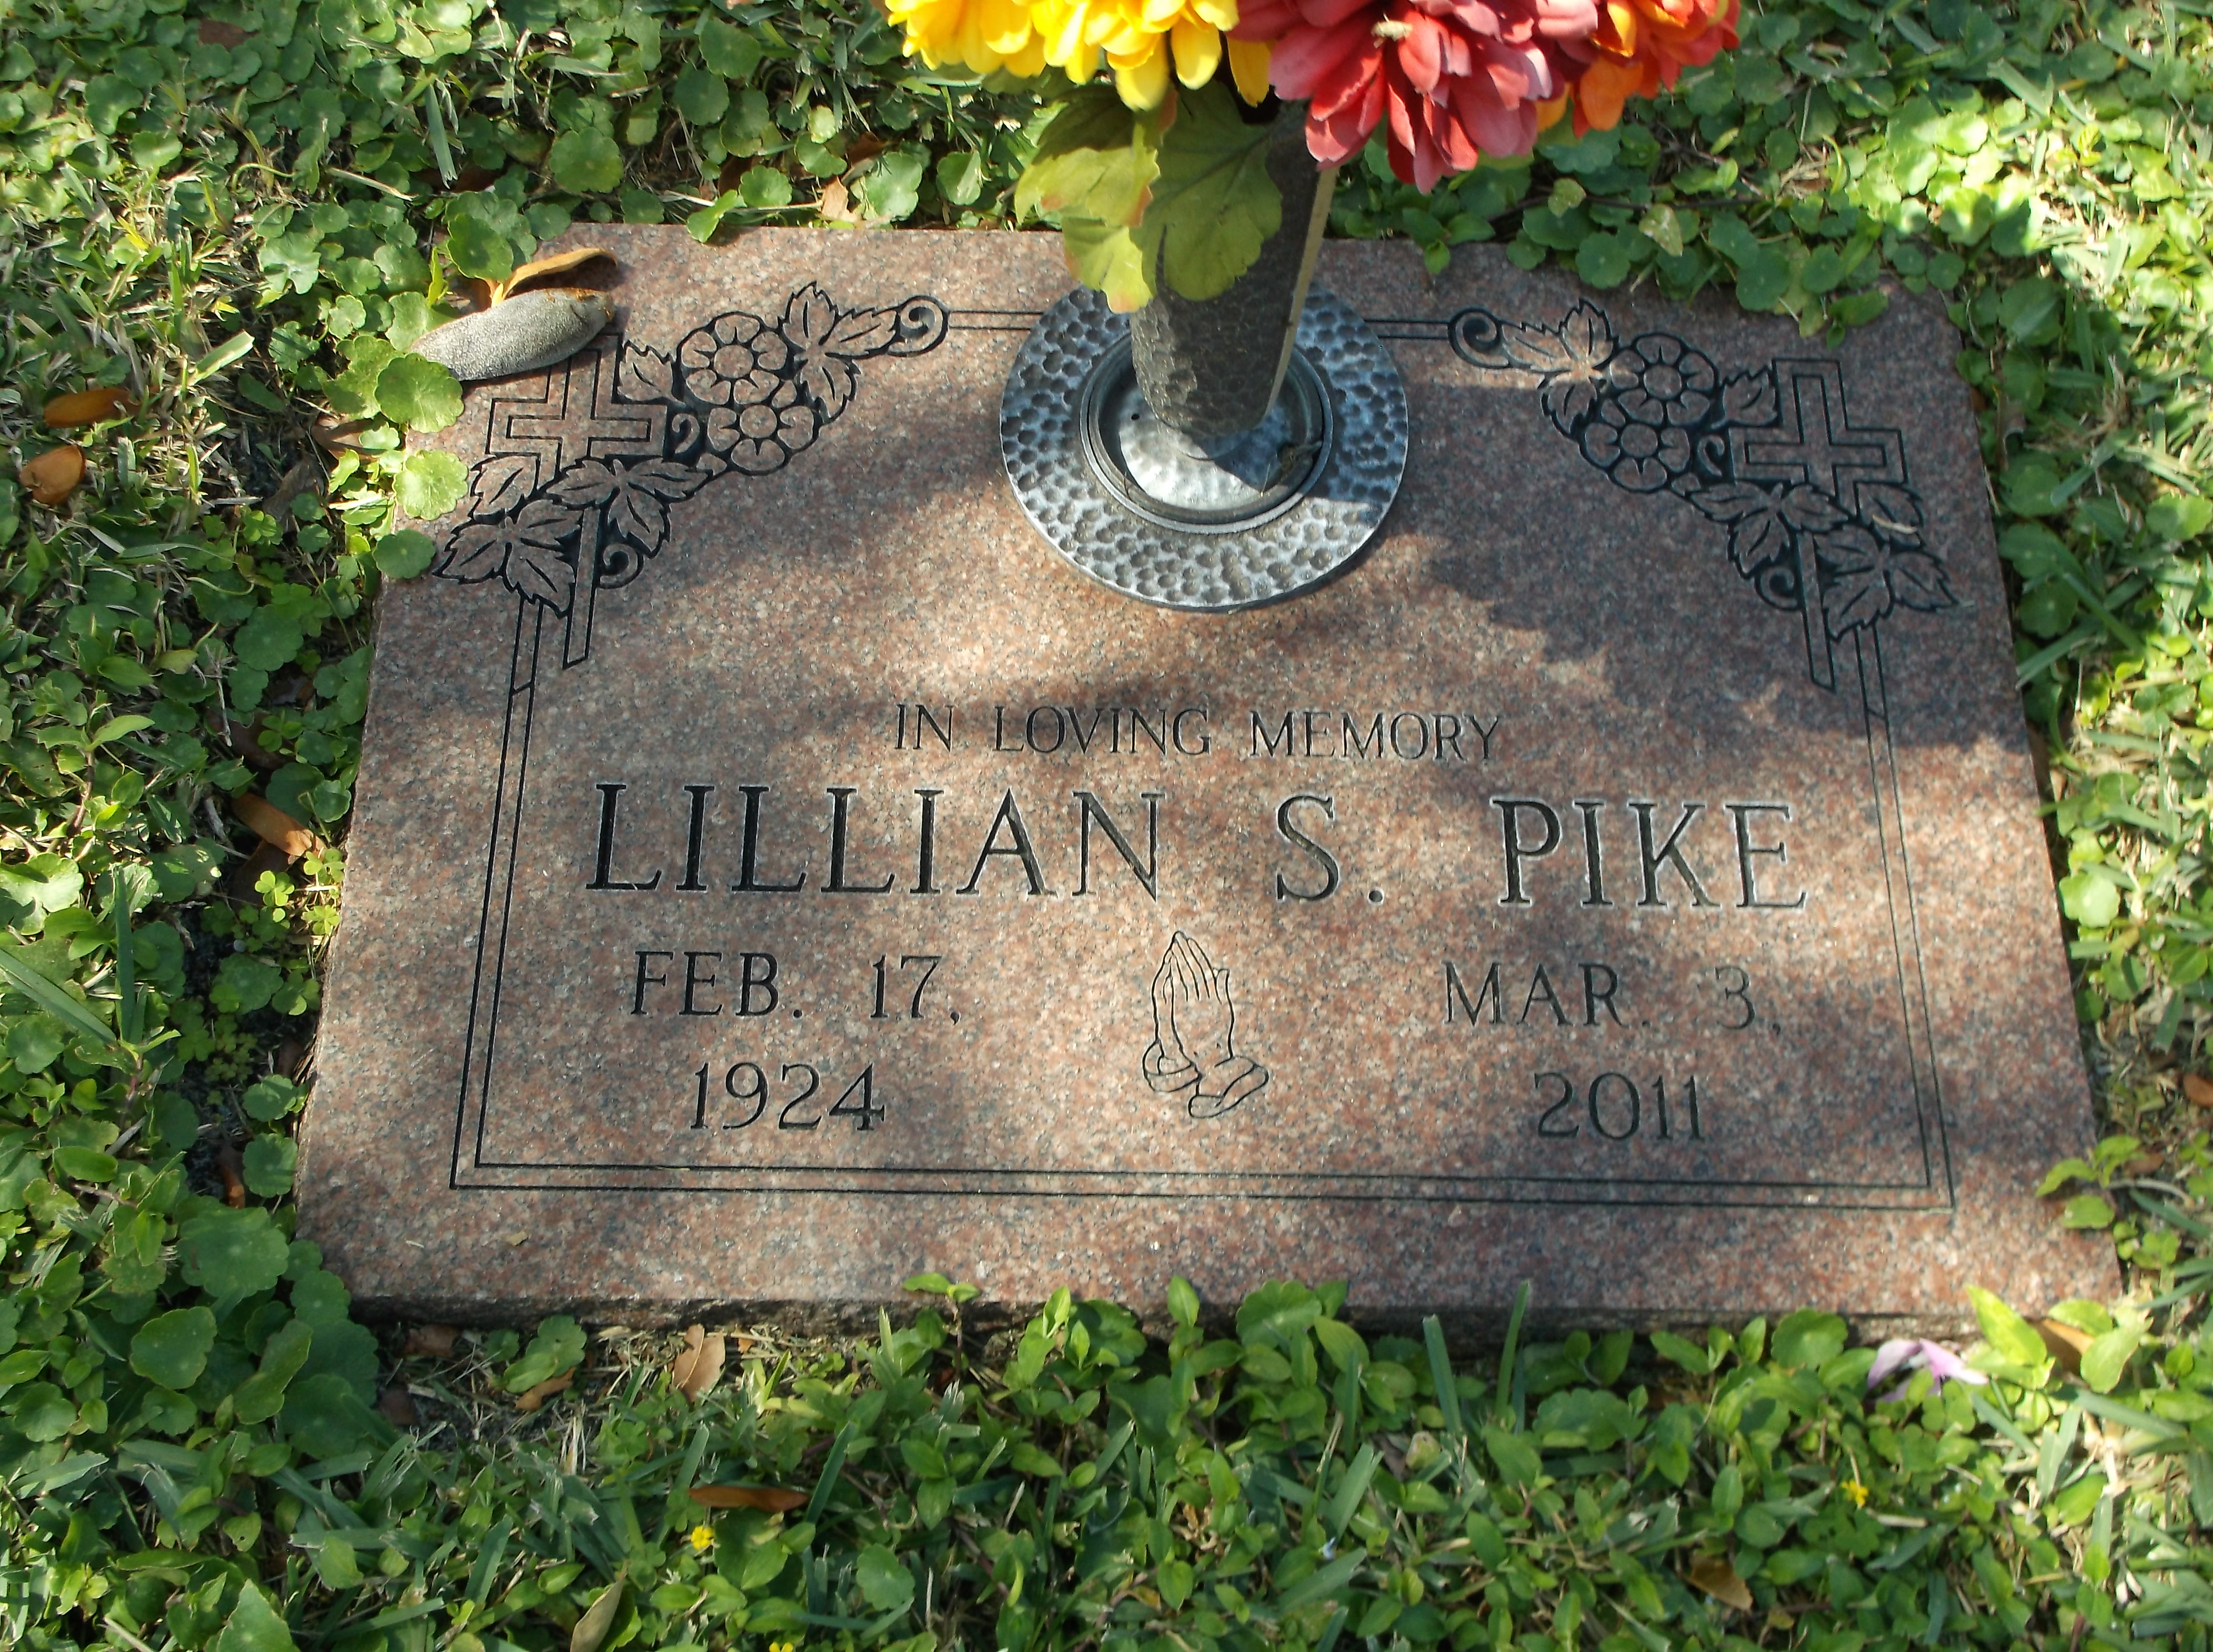 Lillian S Pike